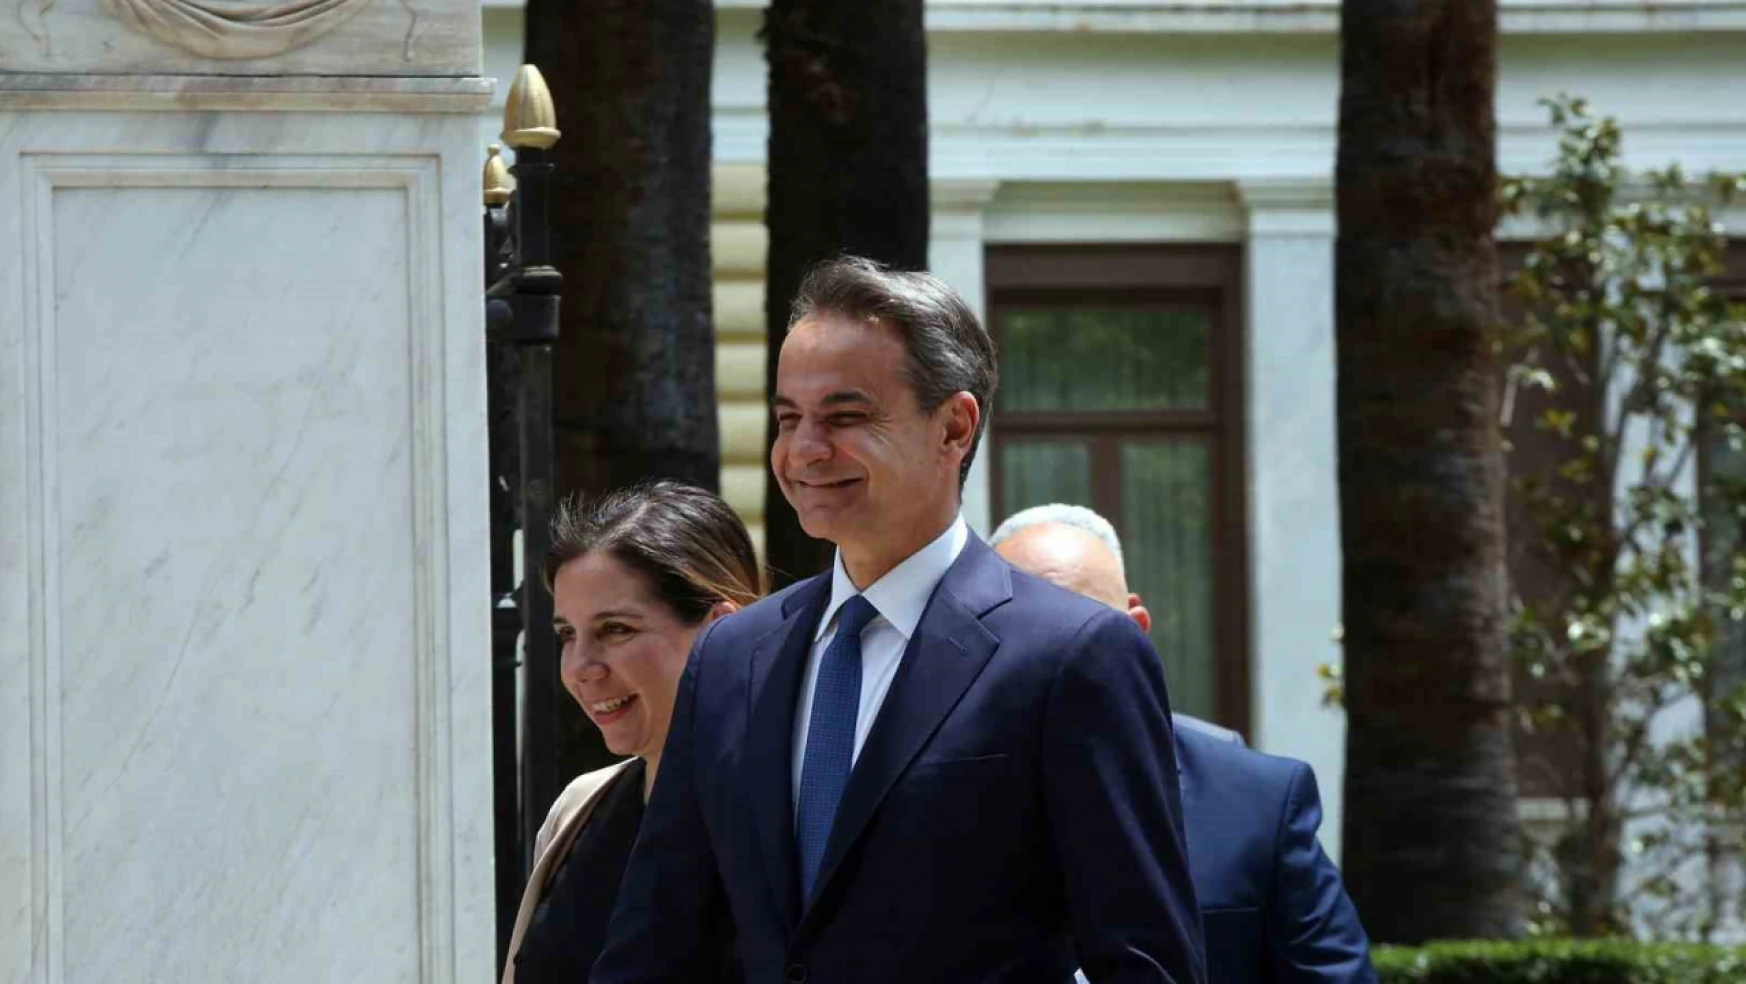 Yunanistan'da seçimin galibi Miçotakis hükümeti kurma görevini iade etti